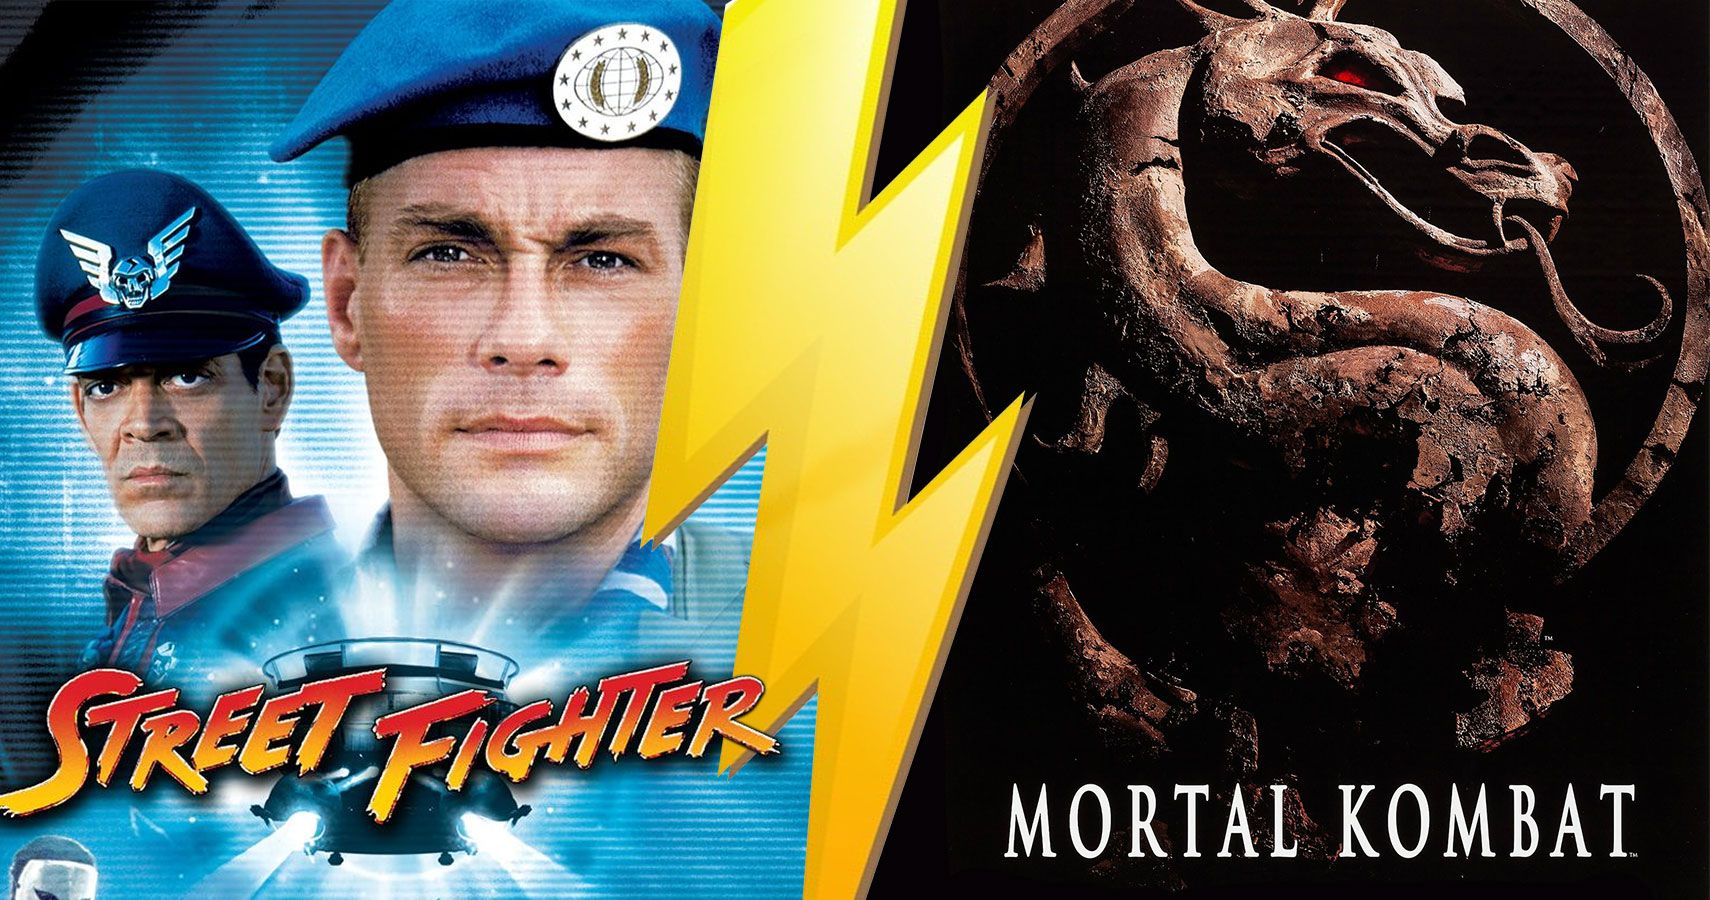 Street Fighter Vs Mortal Kombat & 9 More '90s Game Debates That